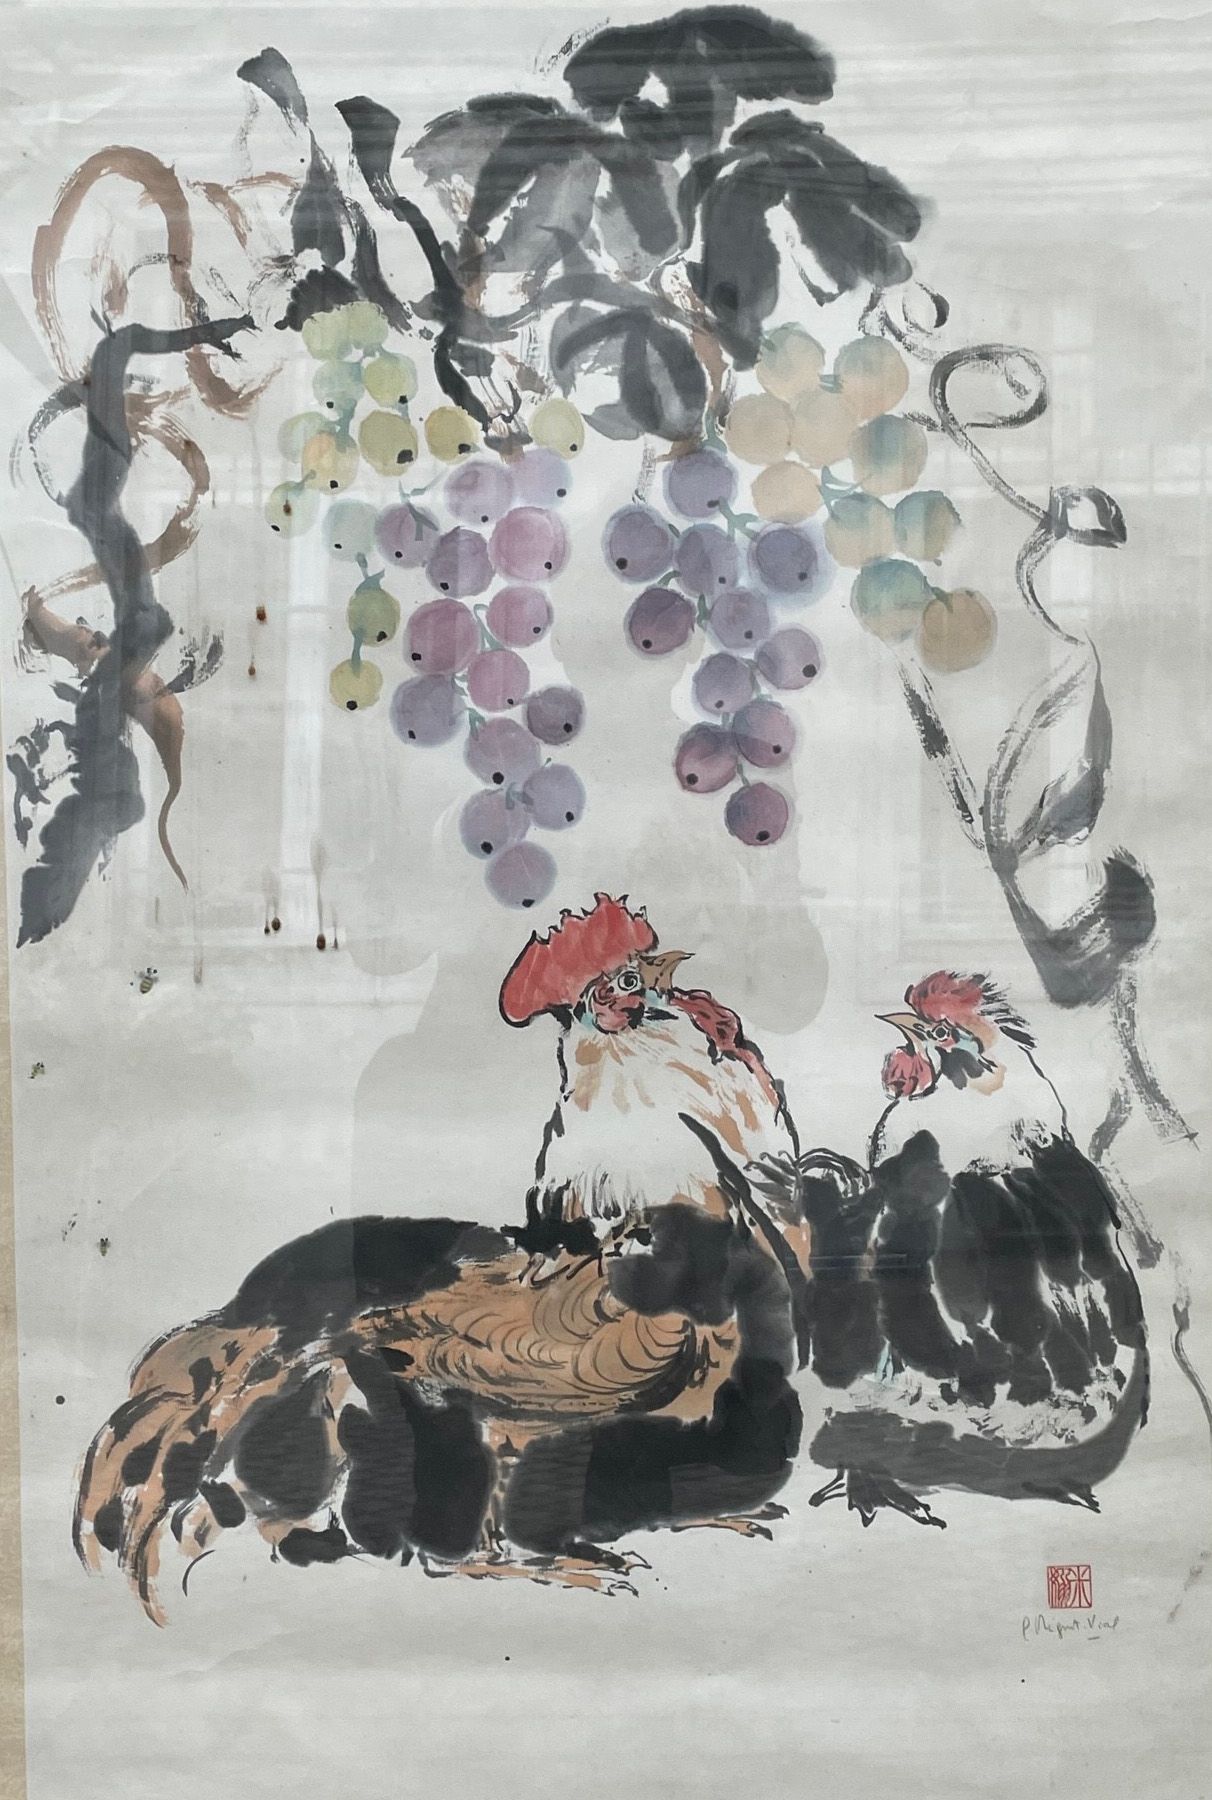 Null 现代学校
公鸡、母鸡和葡萄
水彩画，右下角有未解读的签名和单字。
83 x 55 cm